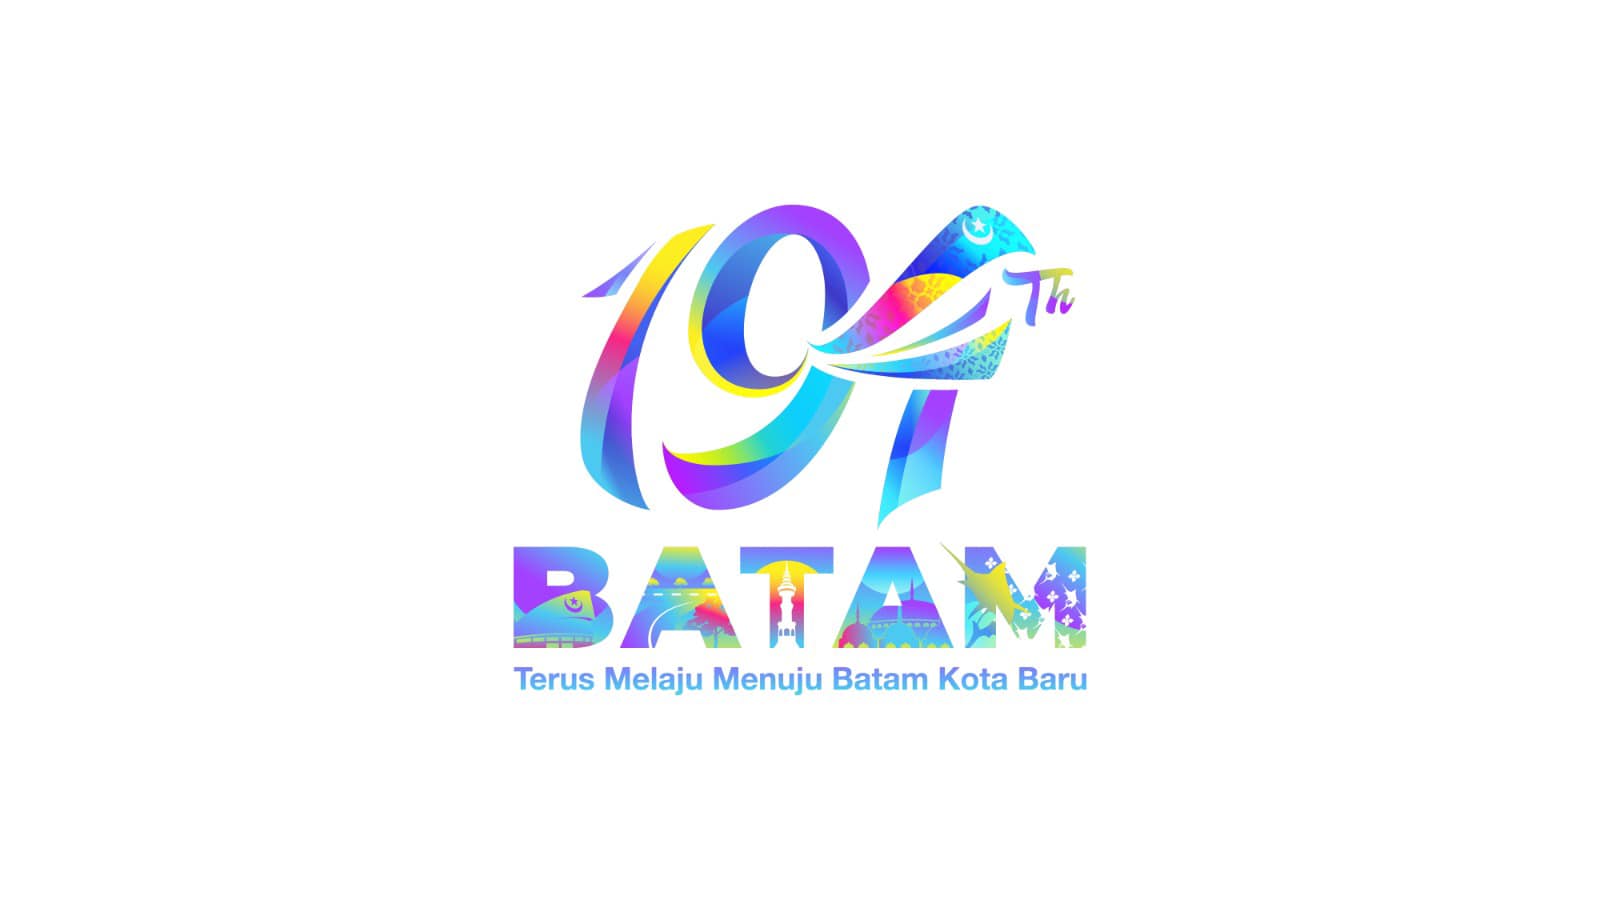 Happy 194th Anniversary of Batam City